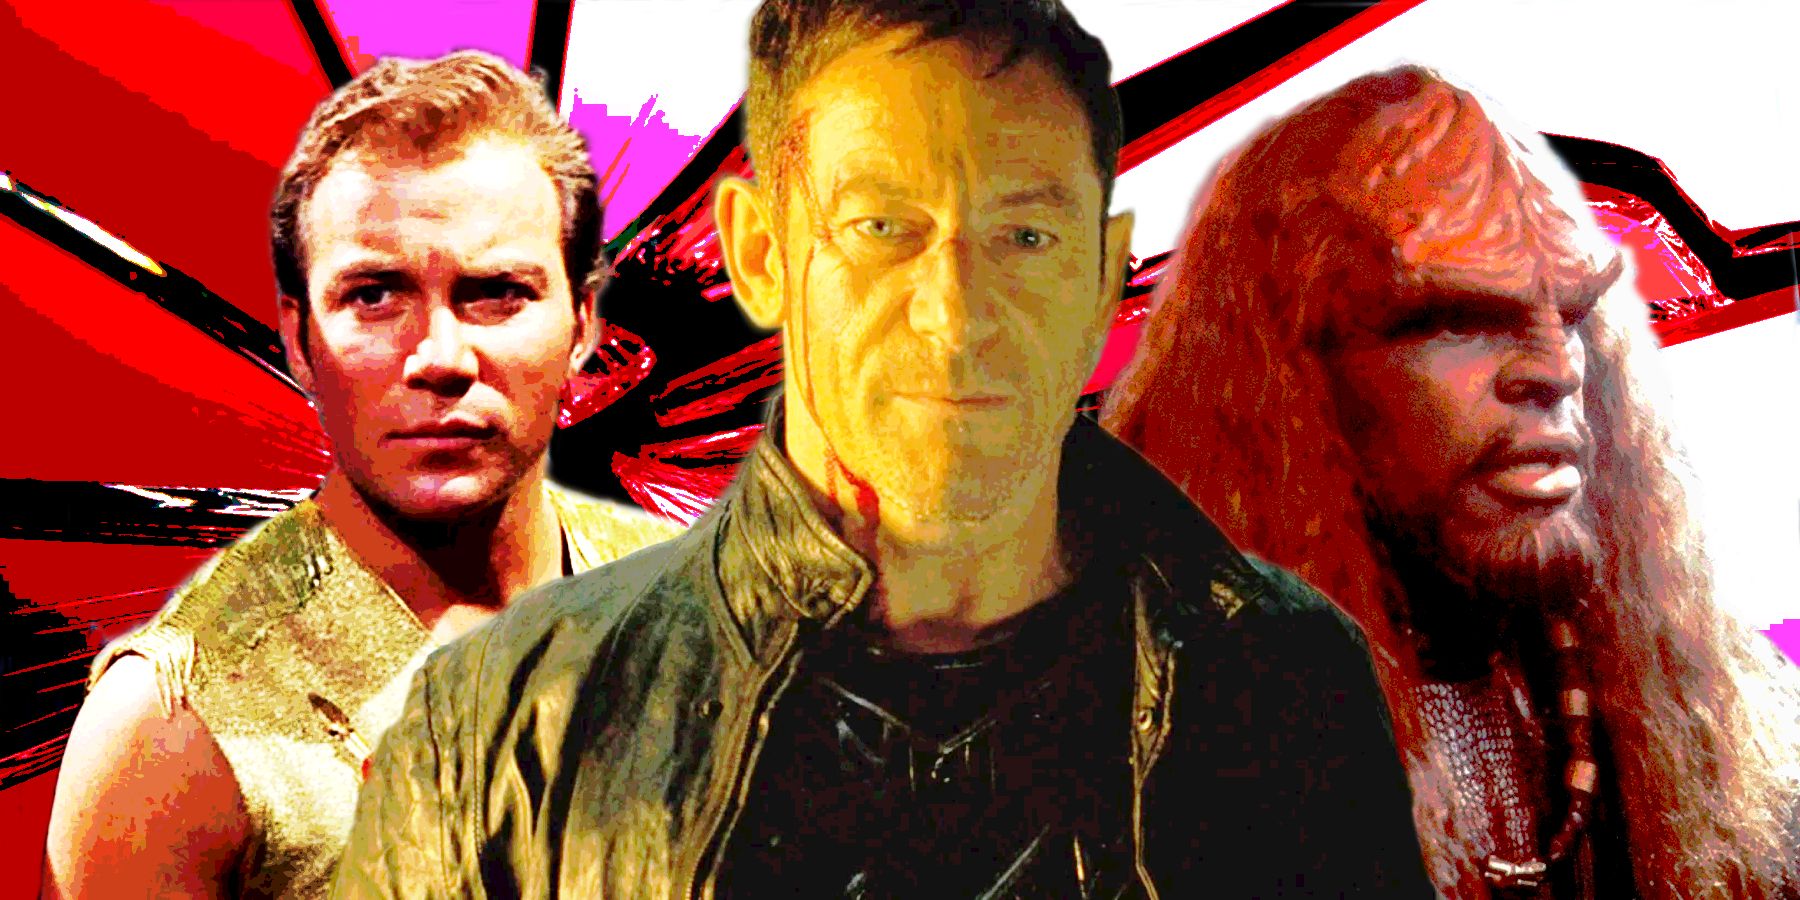 William Shatner as Kirk, Jason Isaacs as Lorca, and Michael Dorn as Worf in Star Trek